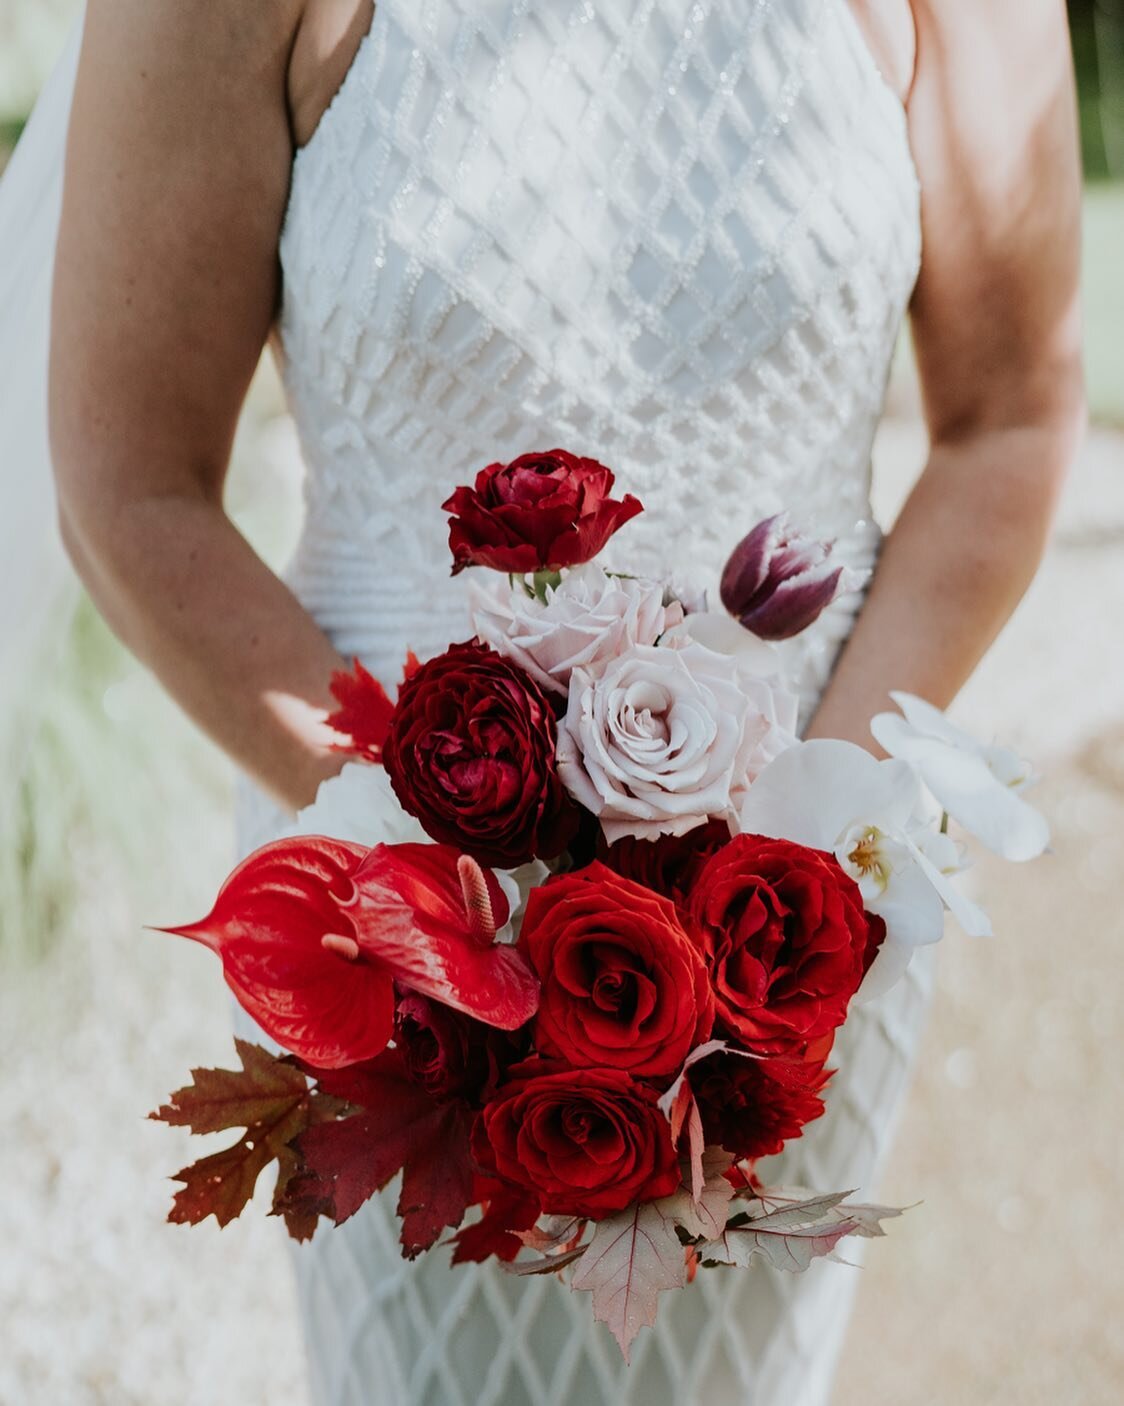 Katerina&rsquo;s bouquet ❤️

Pic: @anchorandhopephotography 
Venue: @Projekt3488
Celebrant: @celebrantkate

#yarravalleywedding
#yarravalleyweddingflorist
#nofloralfoam
#weddingfloristmelbourne
#melbournebride
#yarravalleyceremony
#noflowerfoam #wedd